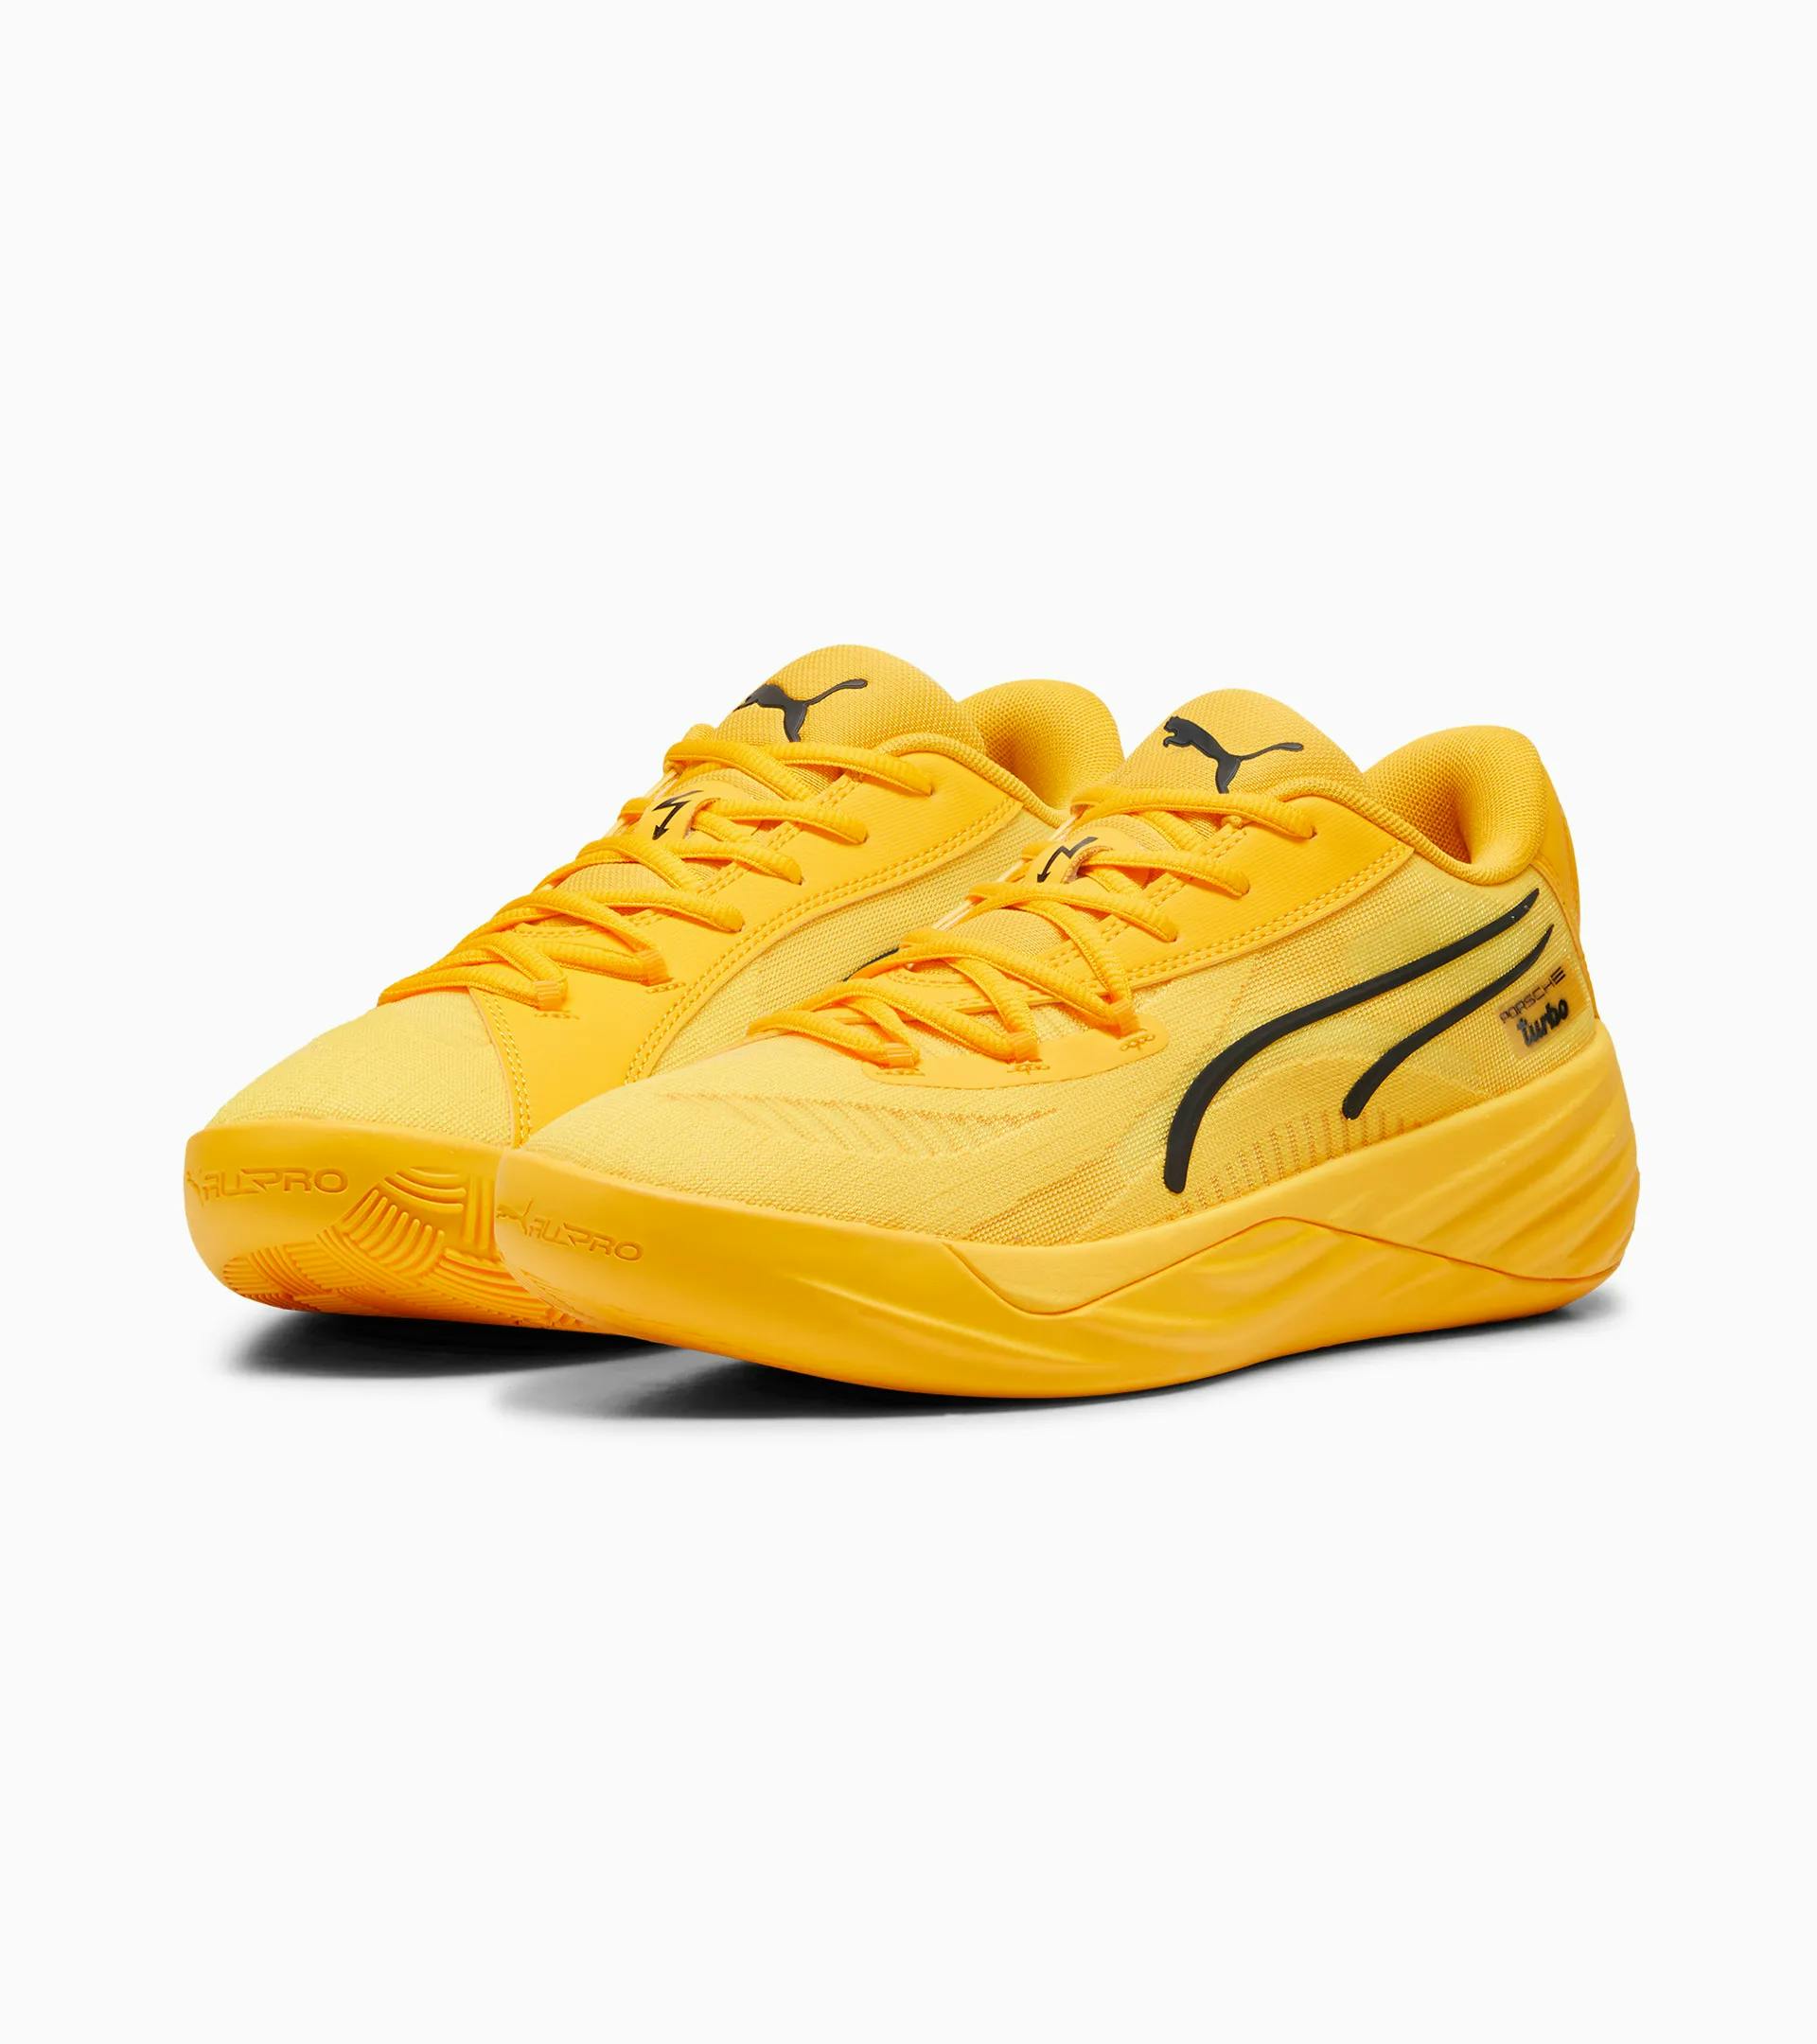 PUMA x PORSCHE All-Pro Nitro Men’s Basketball Shoes